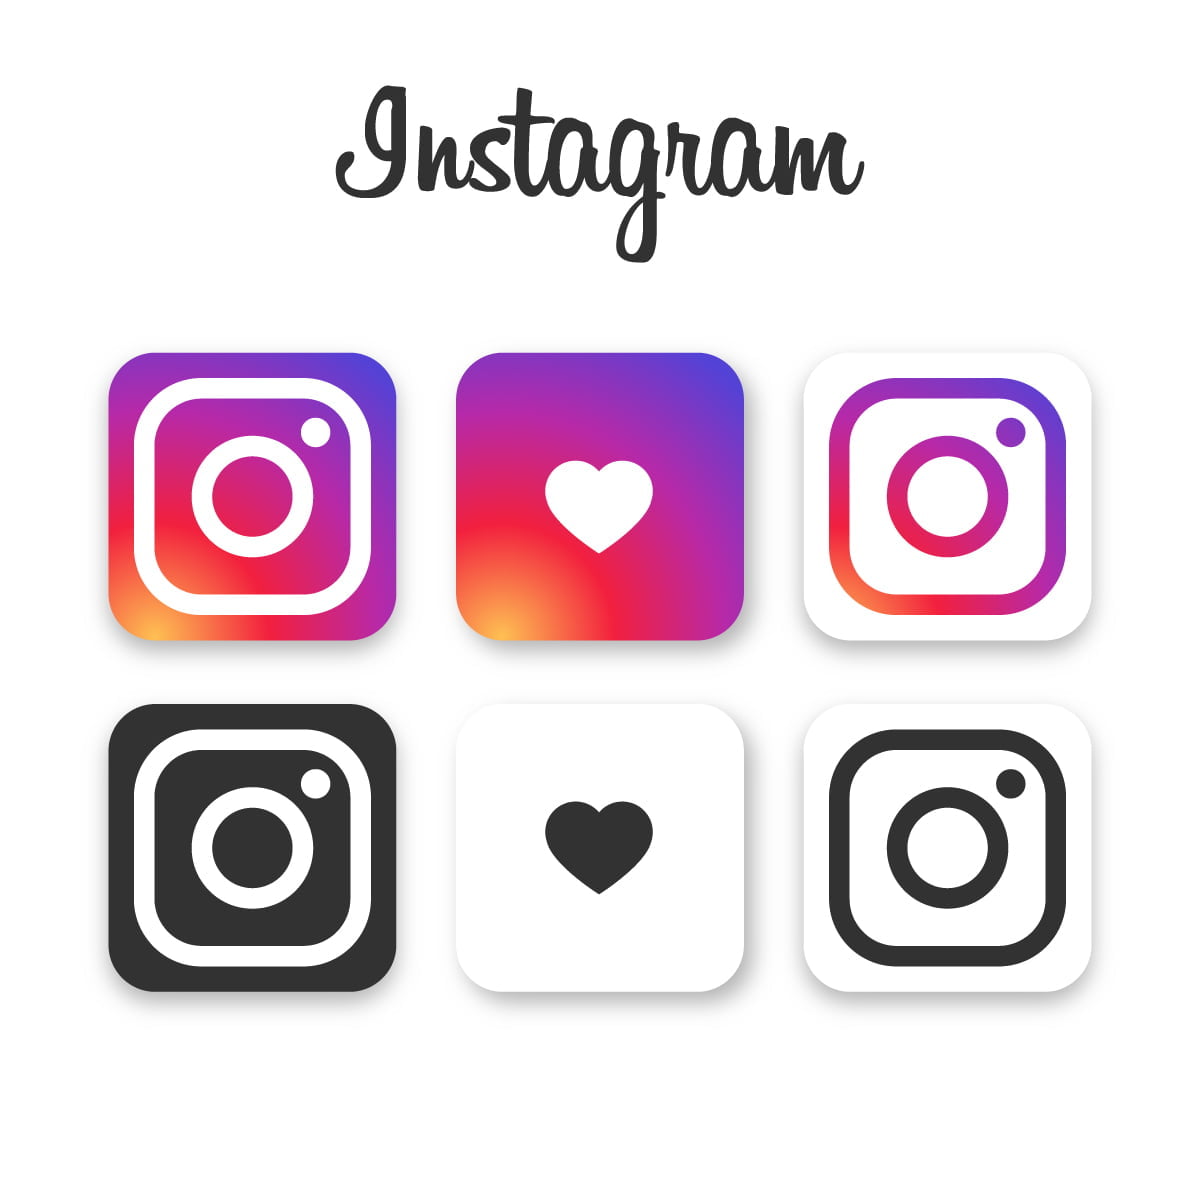 Instagram logos on a white background